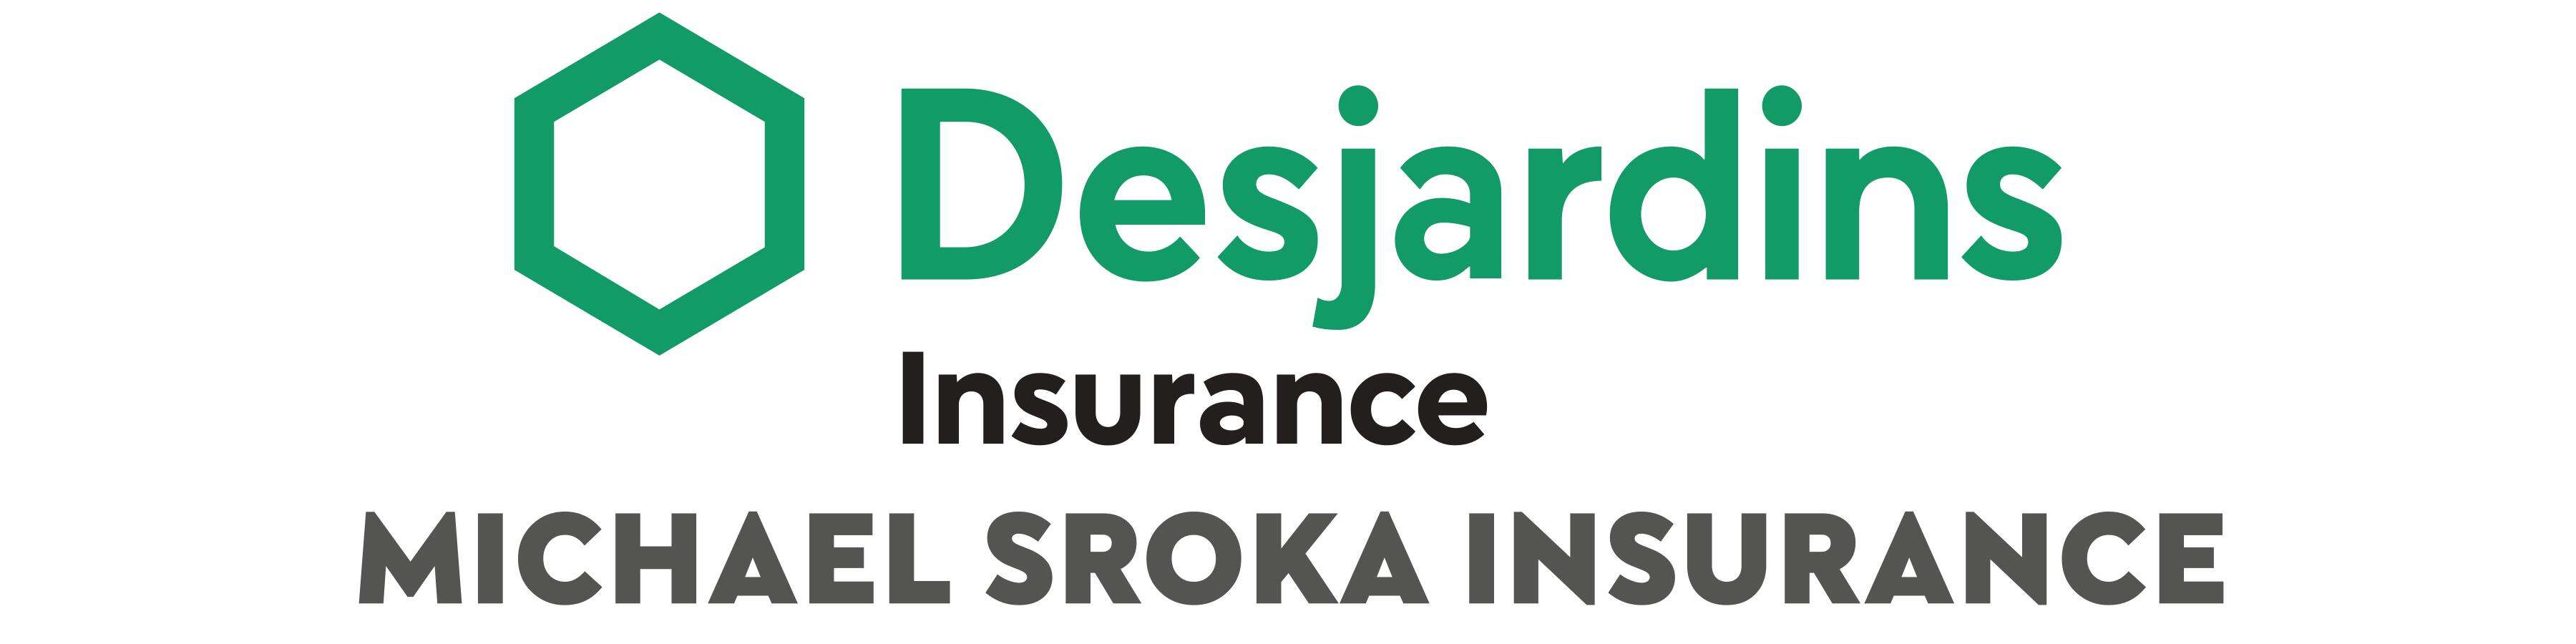 Desjardins Insurance Michael Sroka	